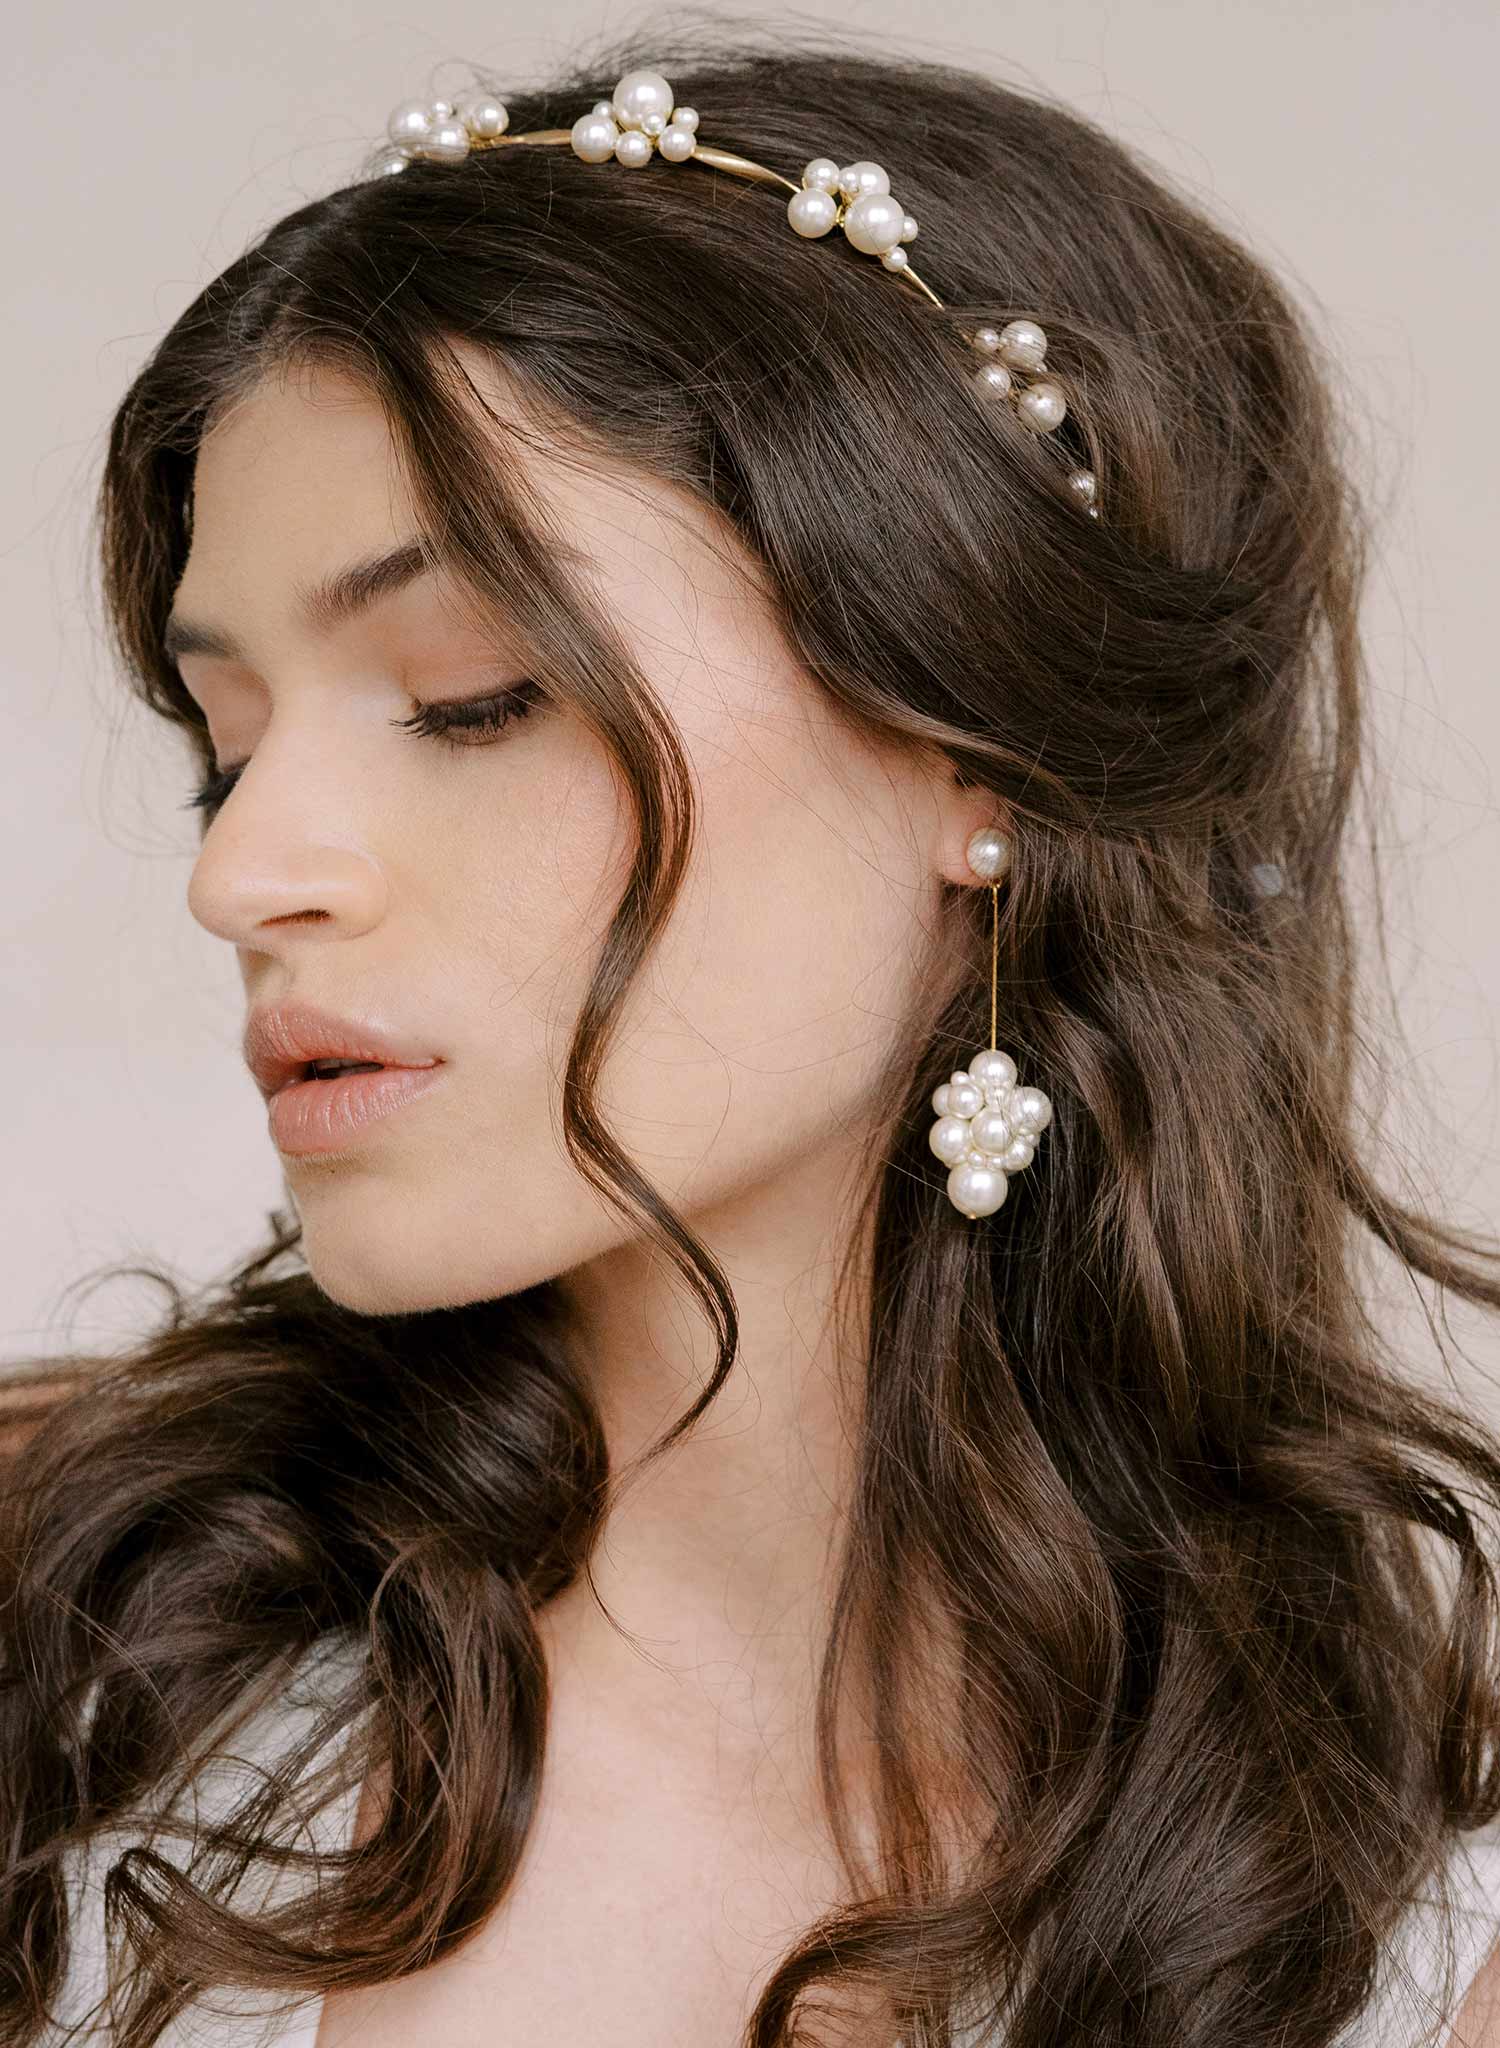 Bridal earrings, earrings, pearl earrings, accessory - Pearl